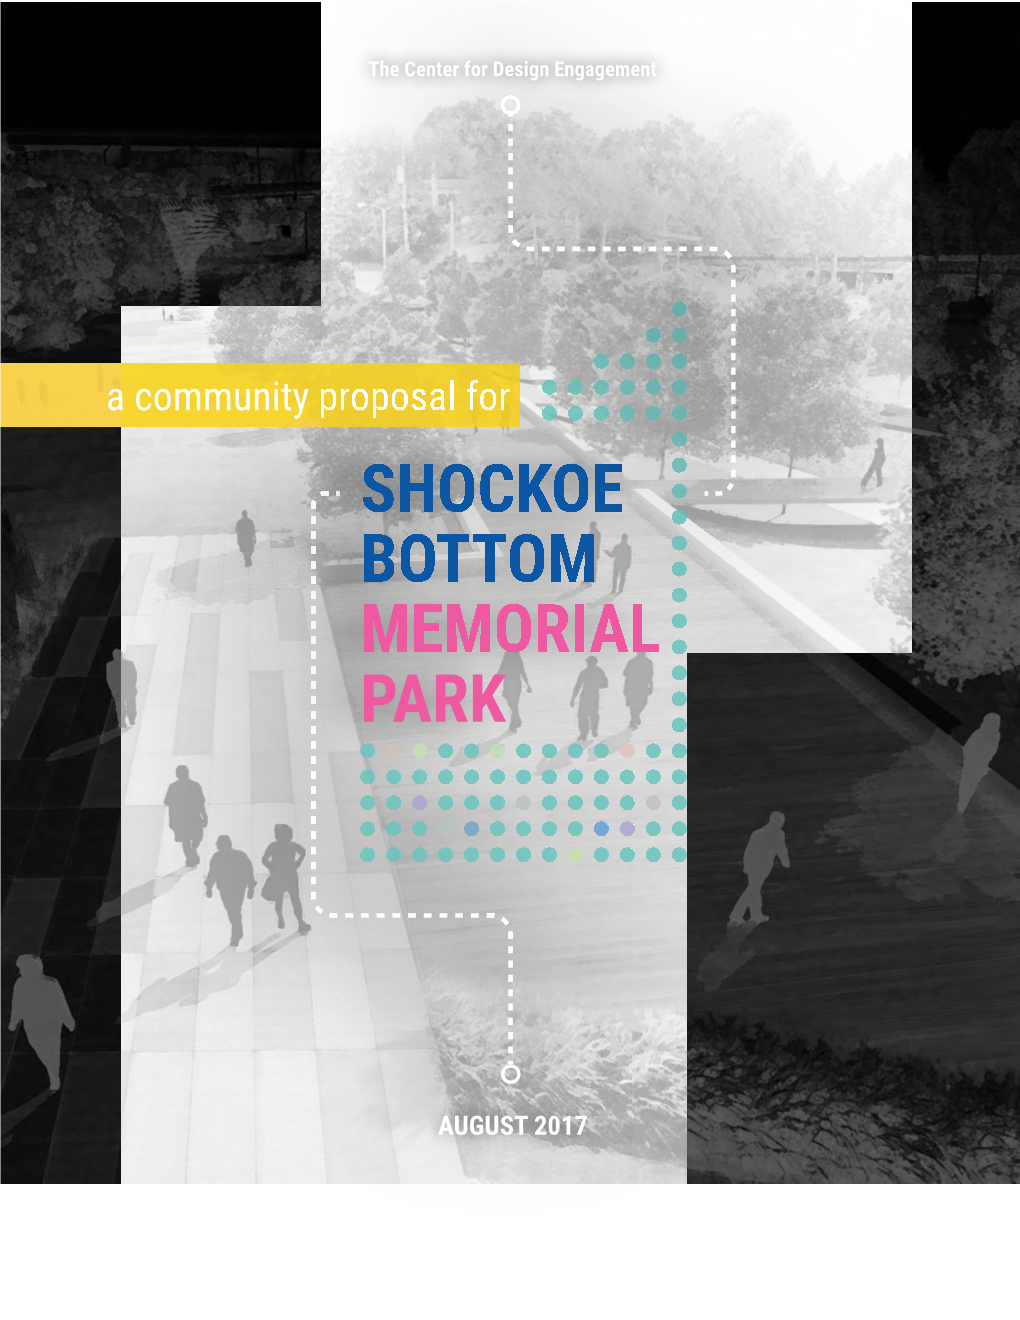 Shockoe Bottom Memorial Park